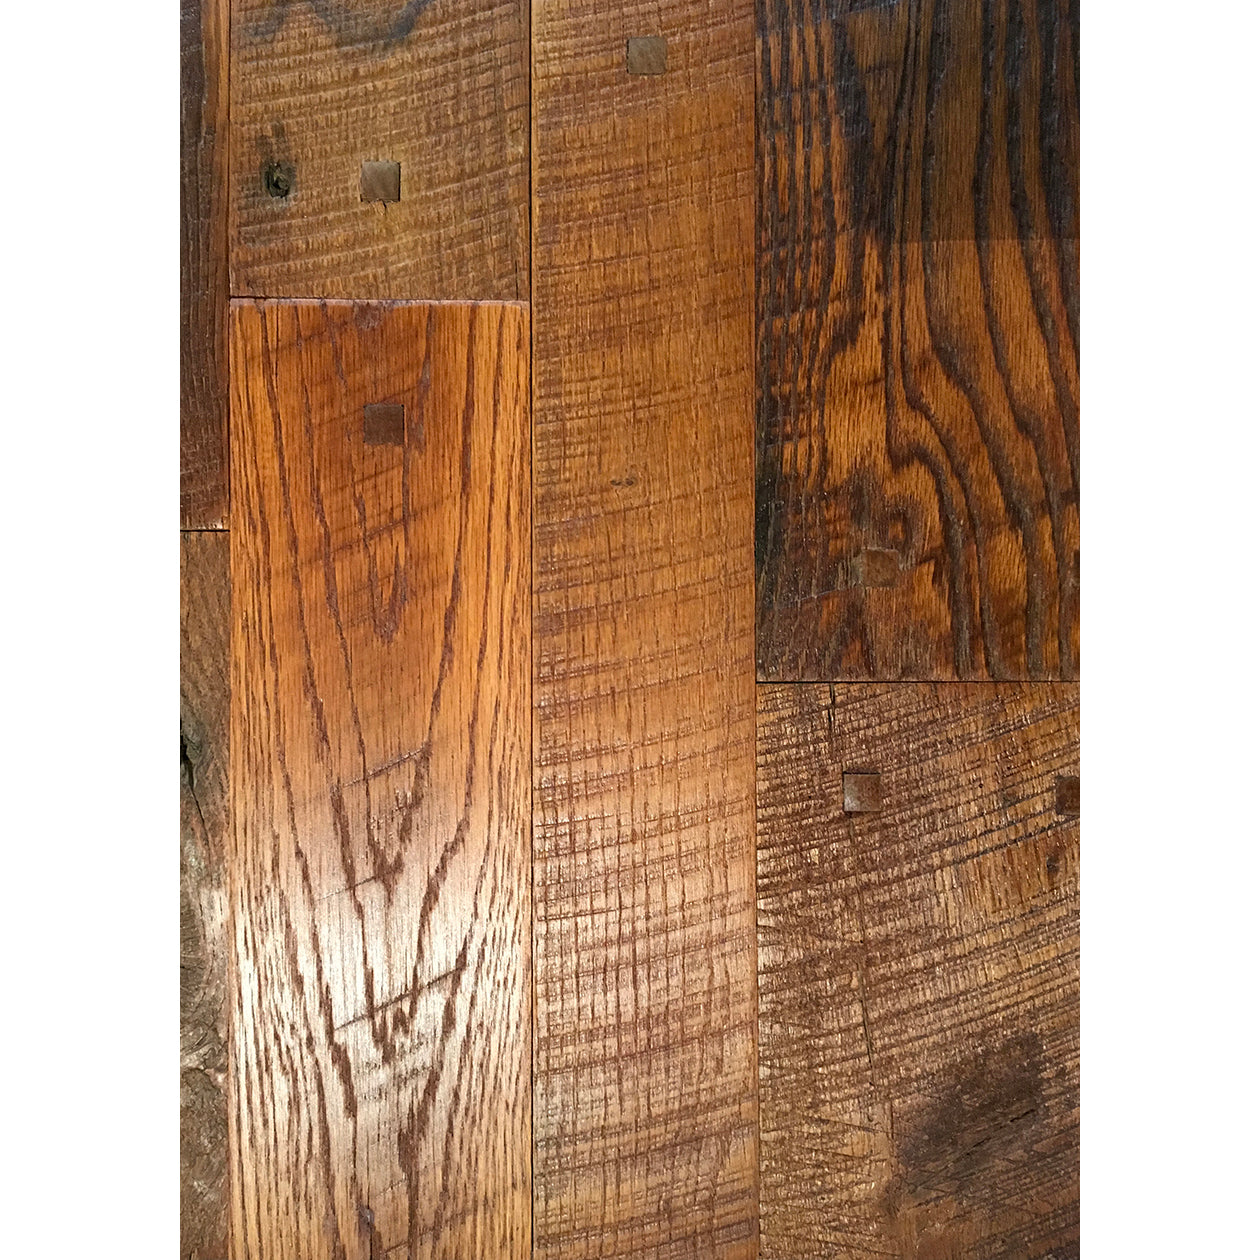 Tennessee Wood Flooring - Reclaimed - Wine Cask